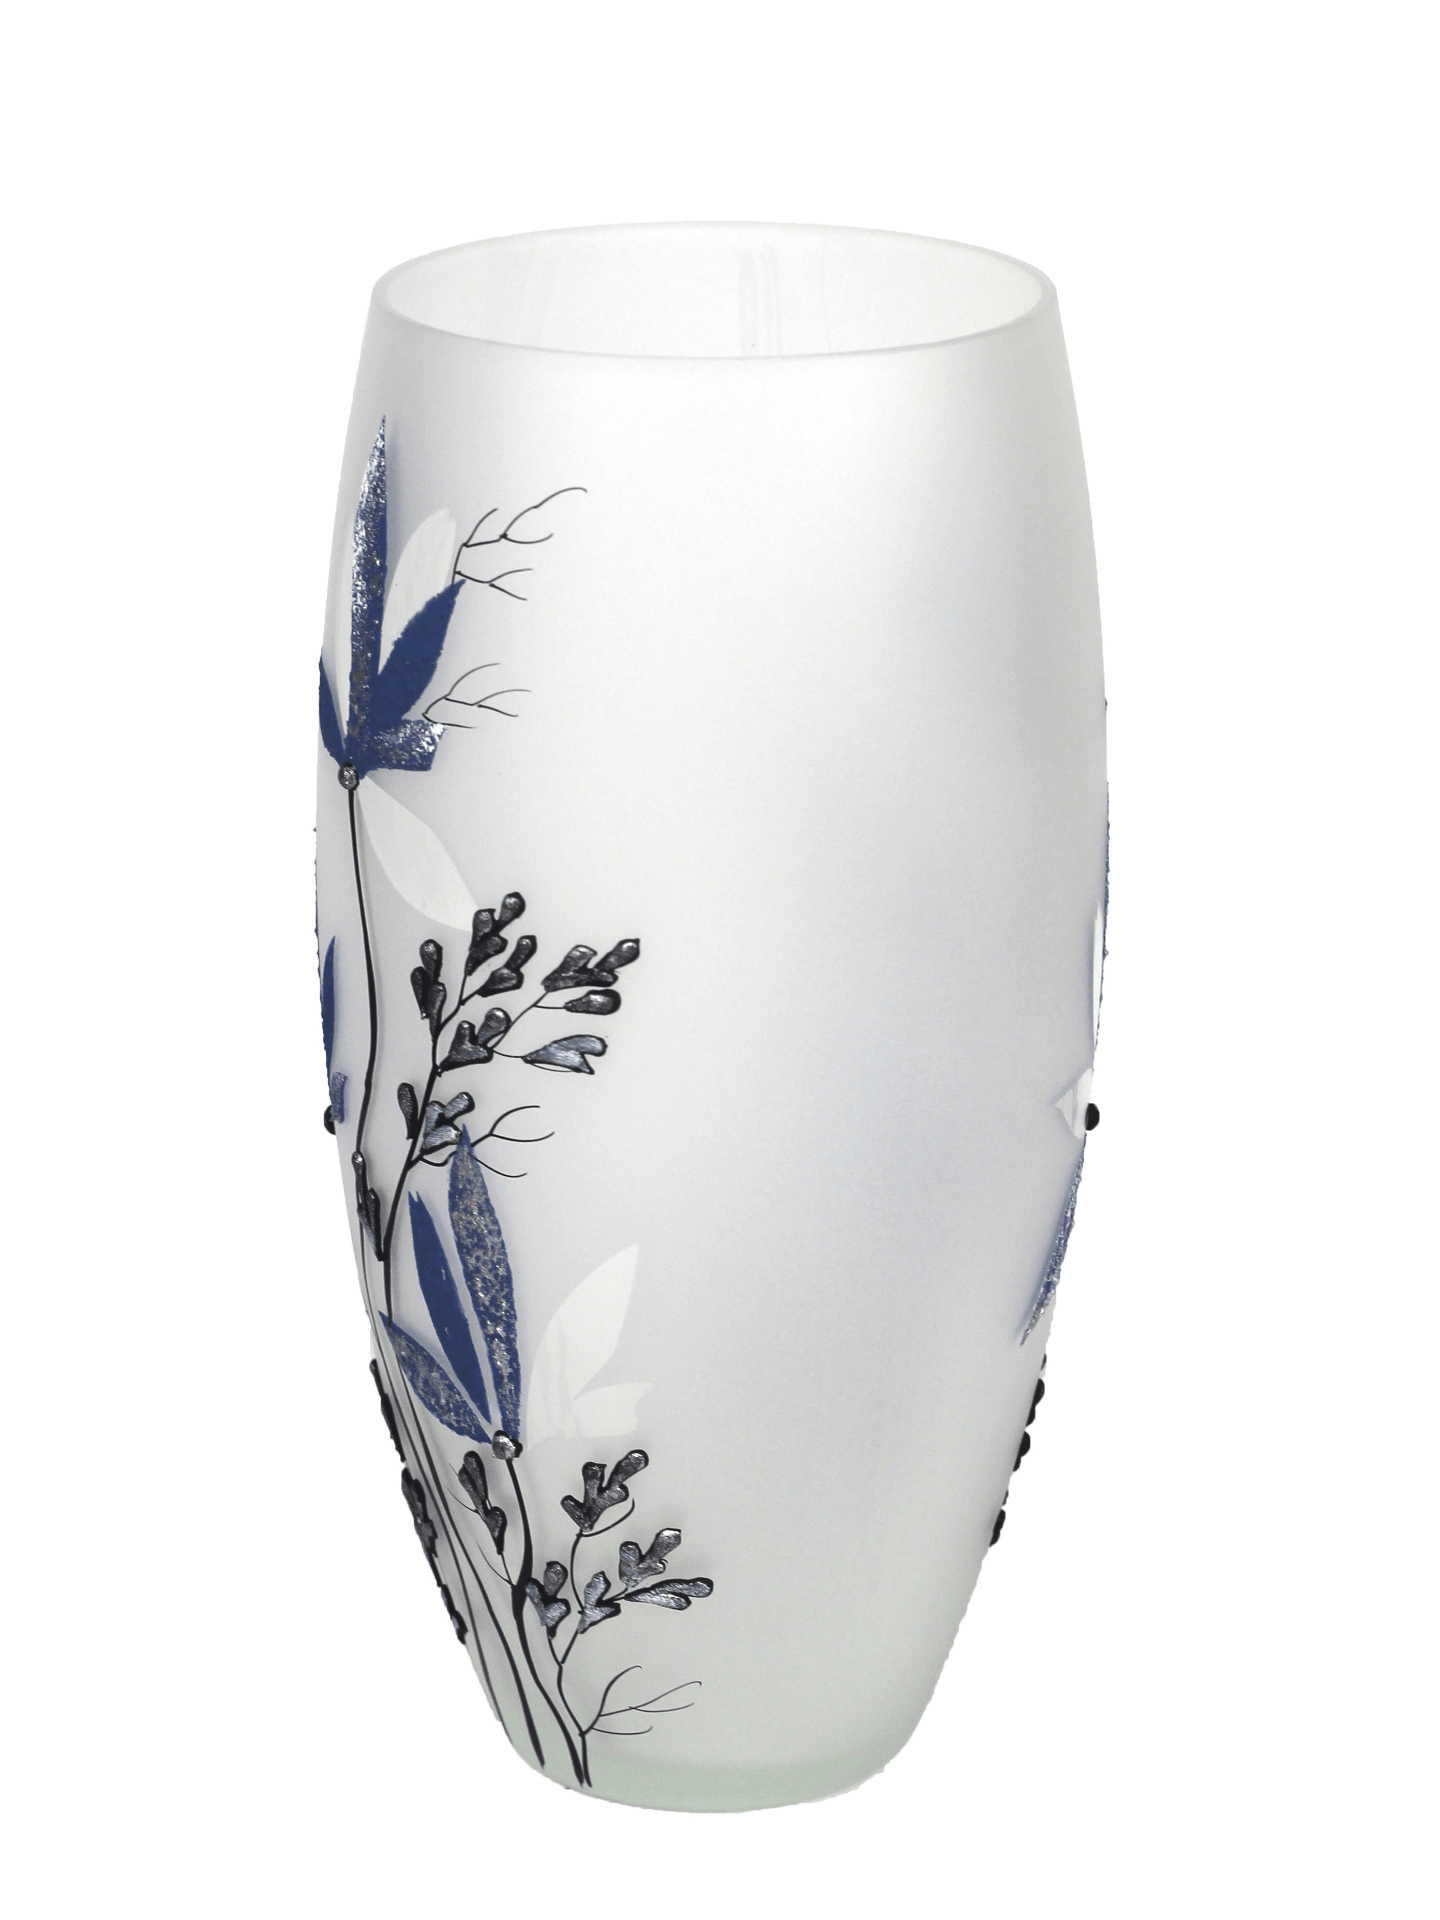 table blue art decorative glass vase 7518/300/sh335  